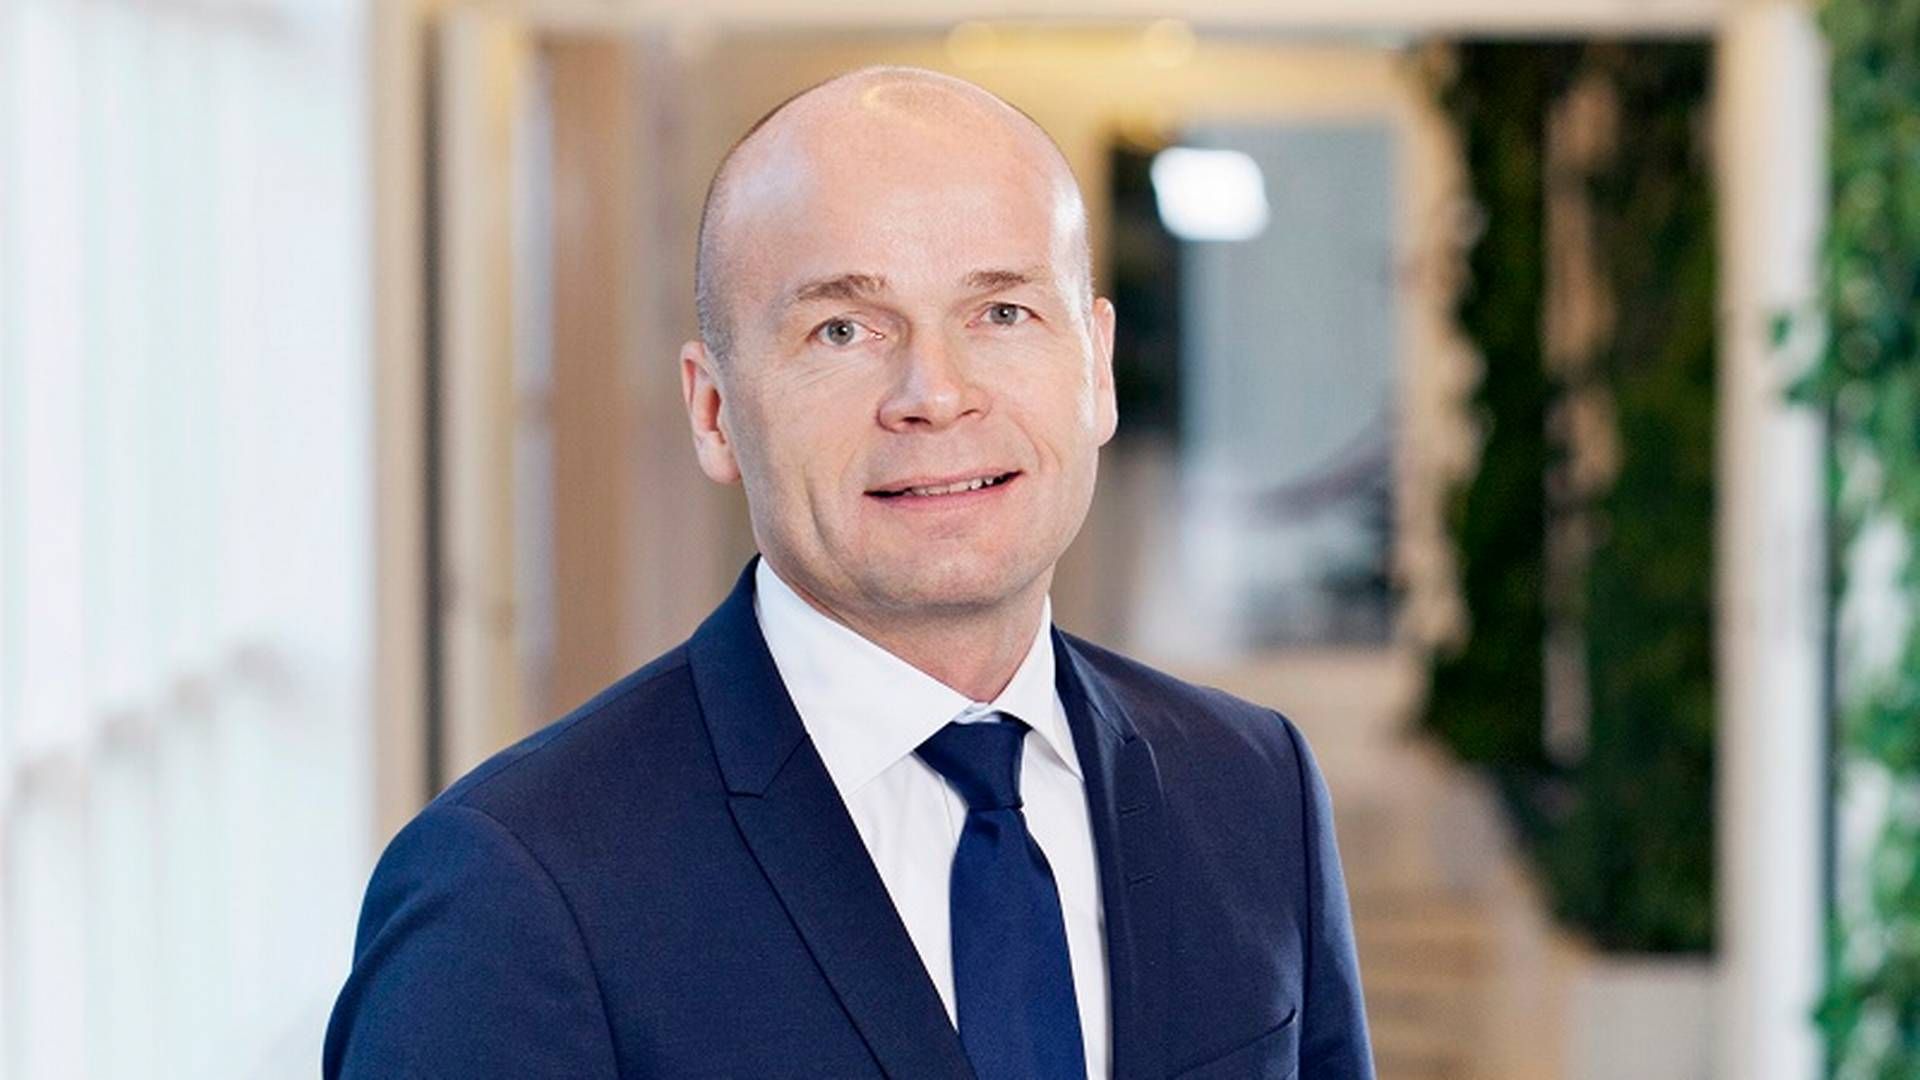 Den vigtigste it it- og telesektore netop nu er at få et moderniseret telforlig, mener TDC's finansdirektør, Stig Pastwa. | Foto: PR/Teis Bruno